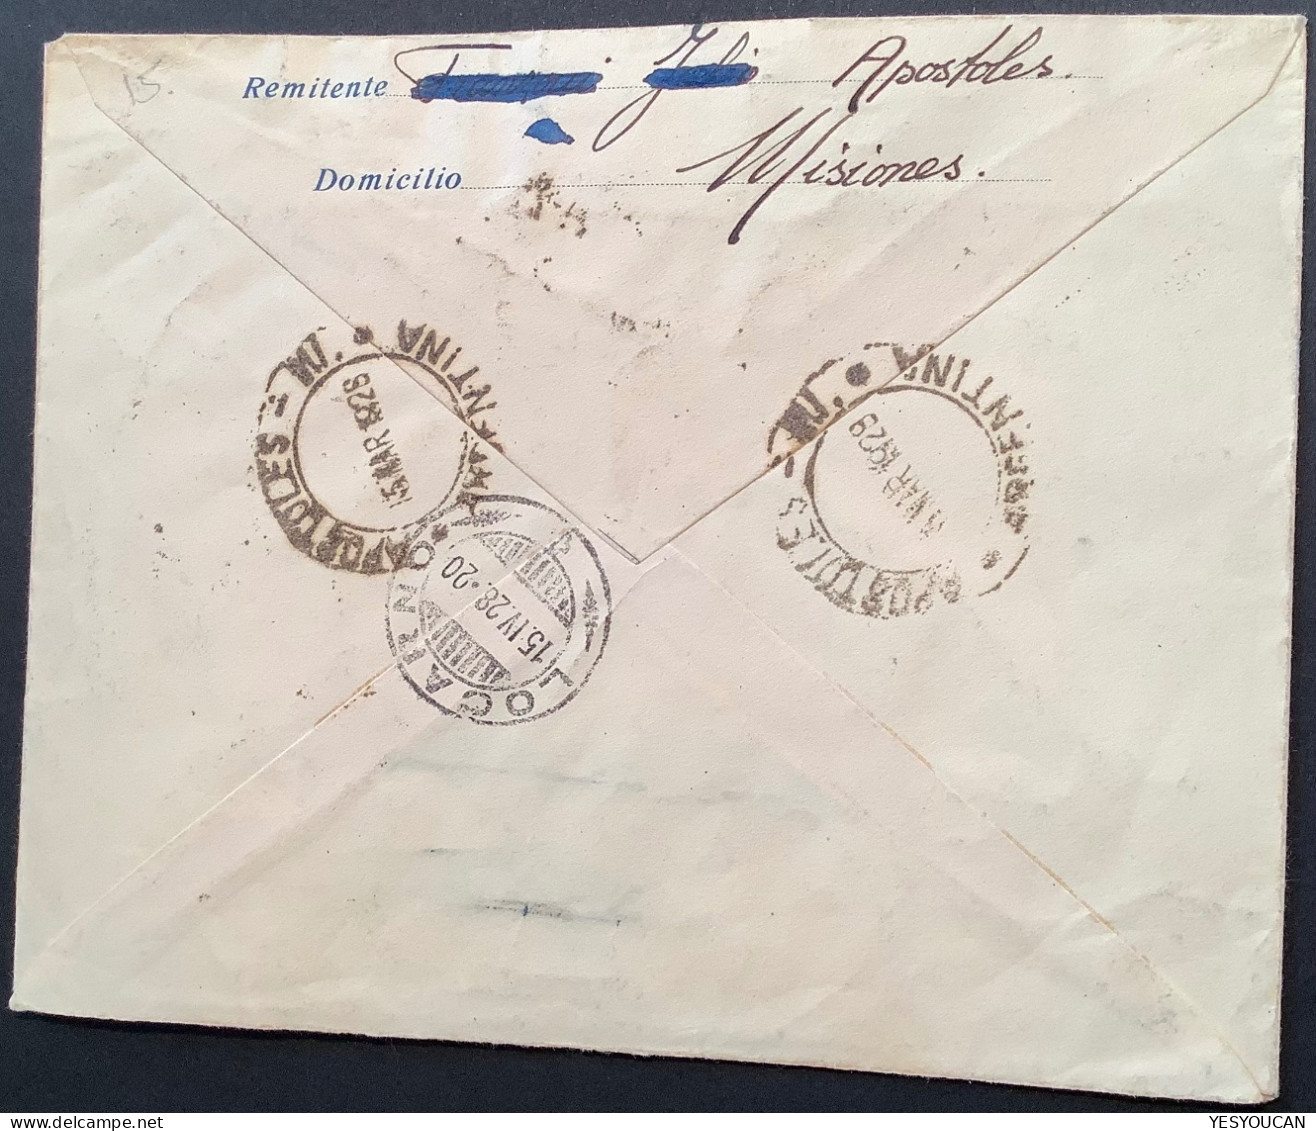 APOSTOLES MISIONES 1928 (Posadas) Cds On Via Aerea 12c Postal Stationery Enveloppe>Locarno (Argentina Air Mail Cover - Ganzsachen